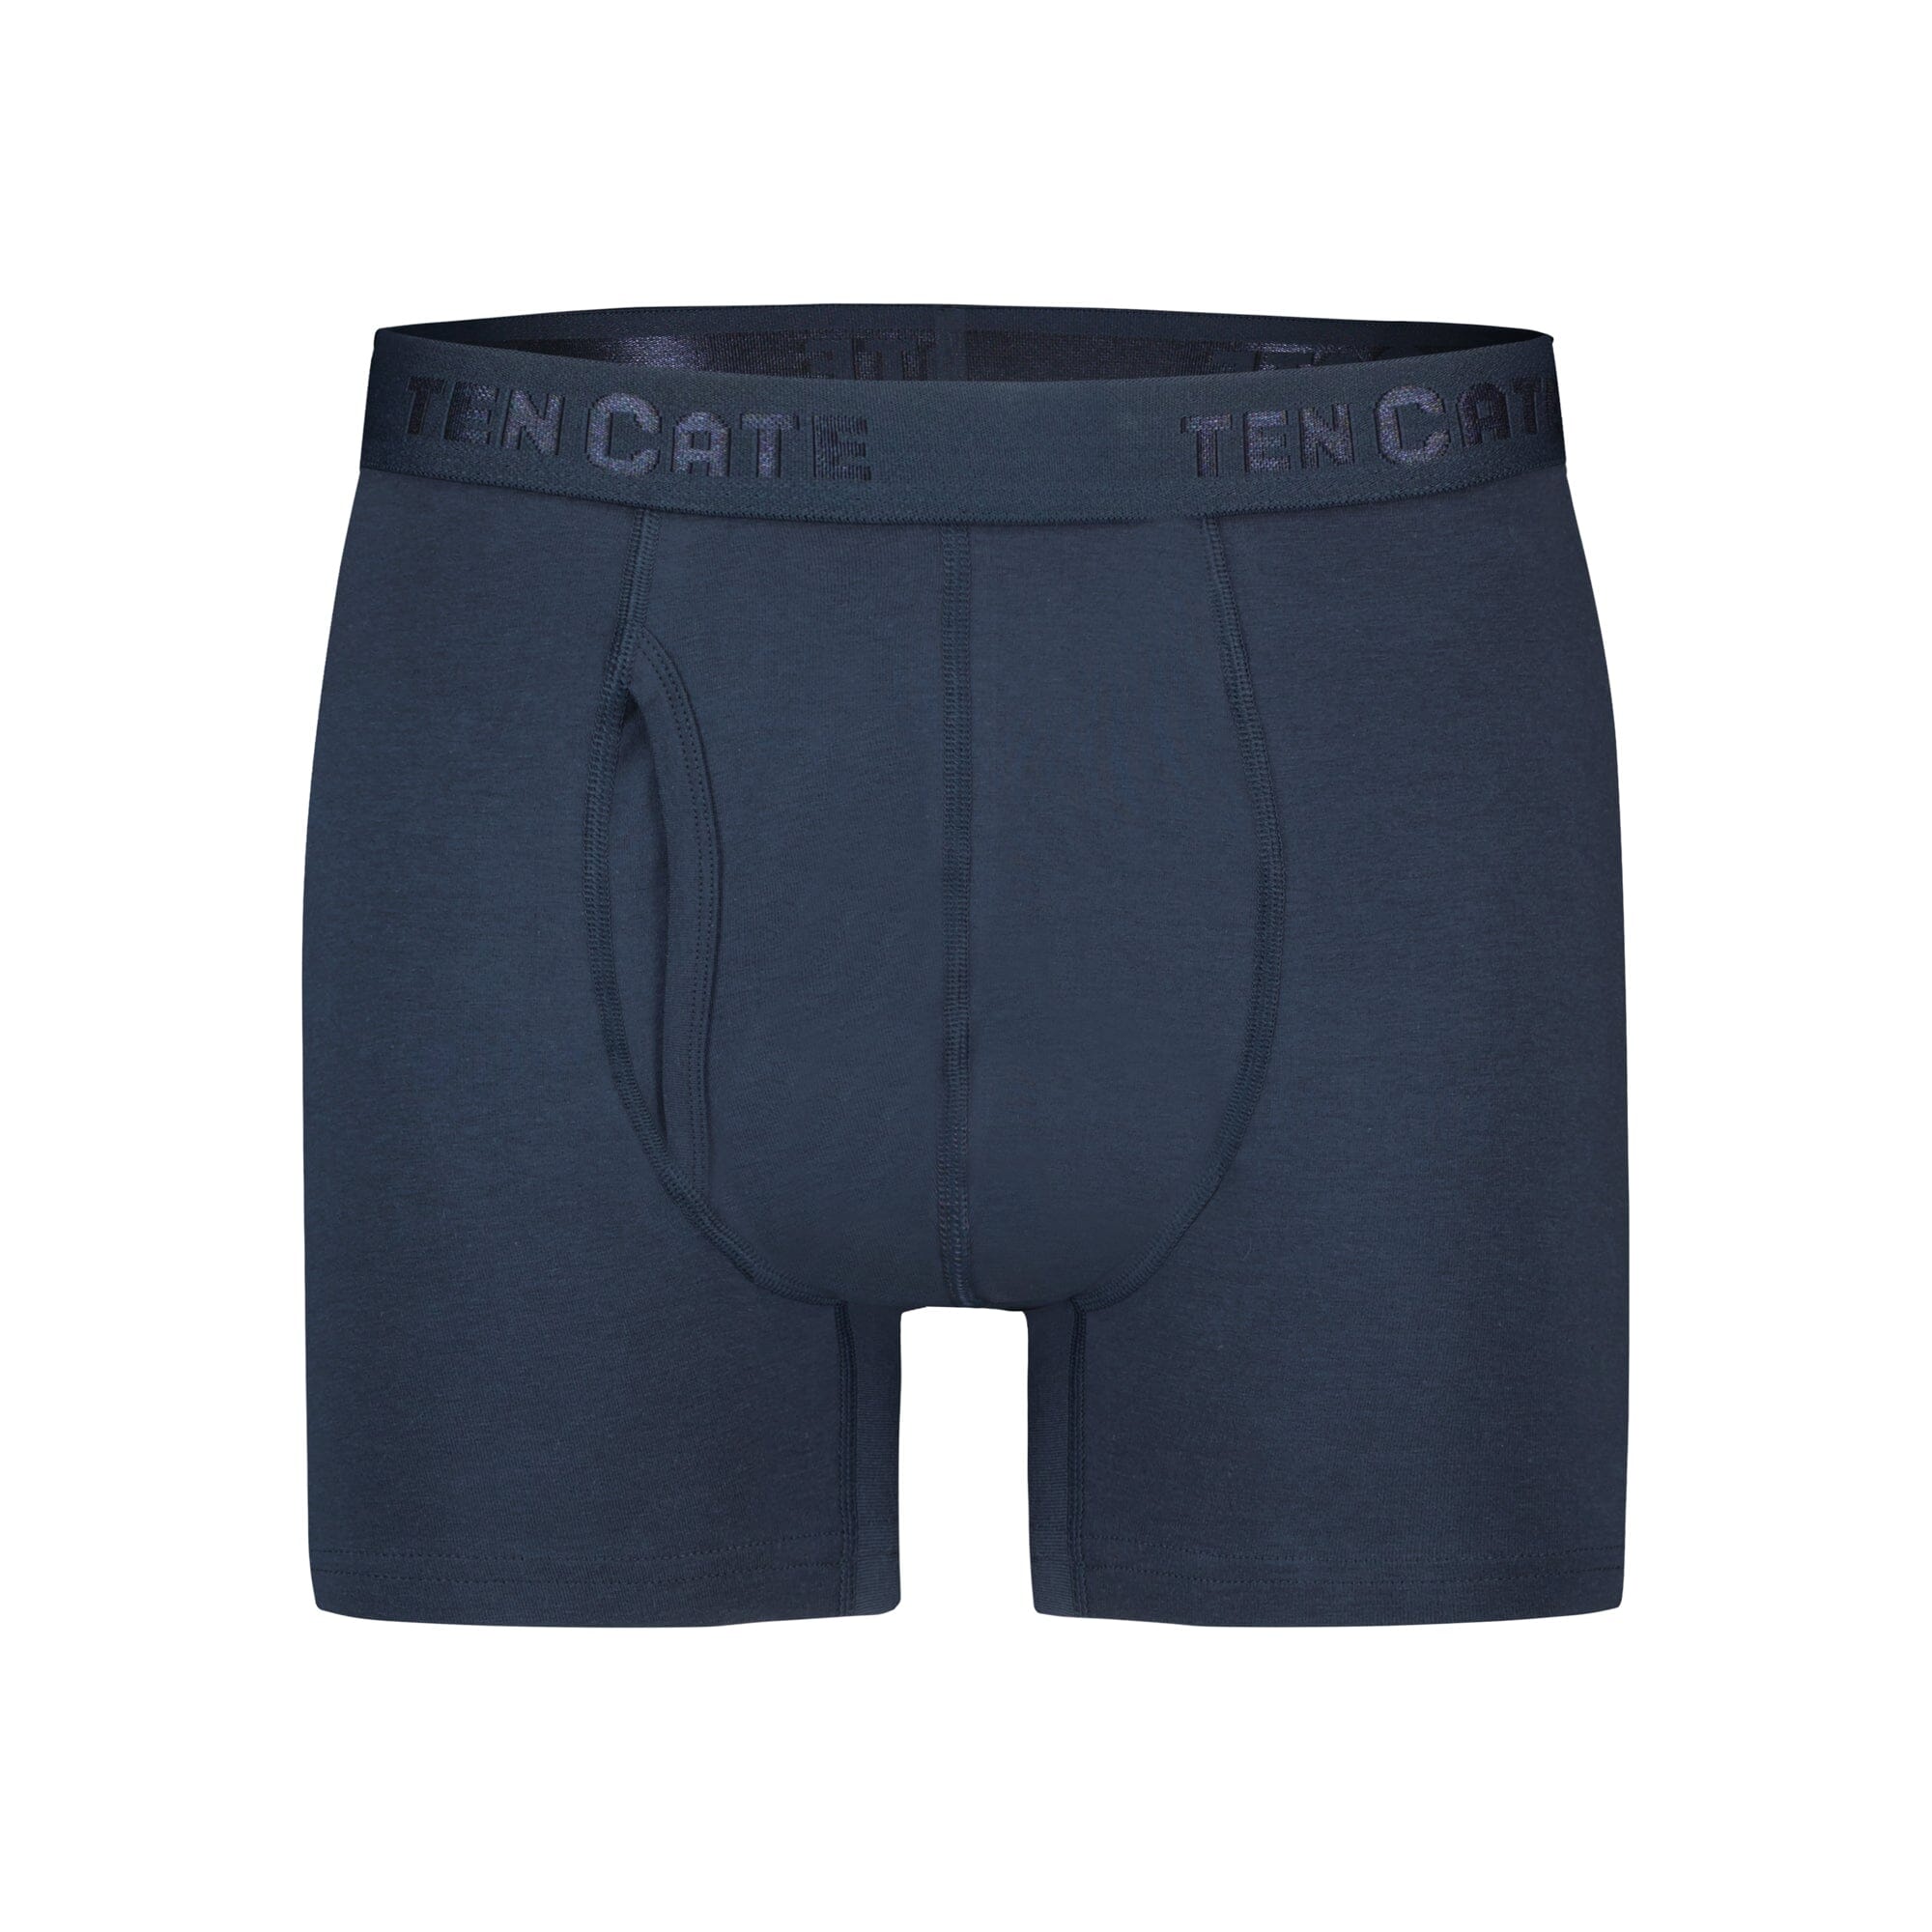 Ten Cate - 32387 - Basic Men Shorts 4-pack - Navy Short Ten Cate 